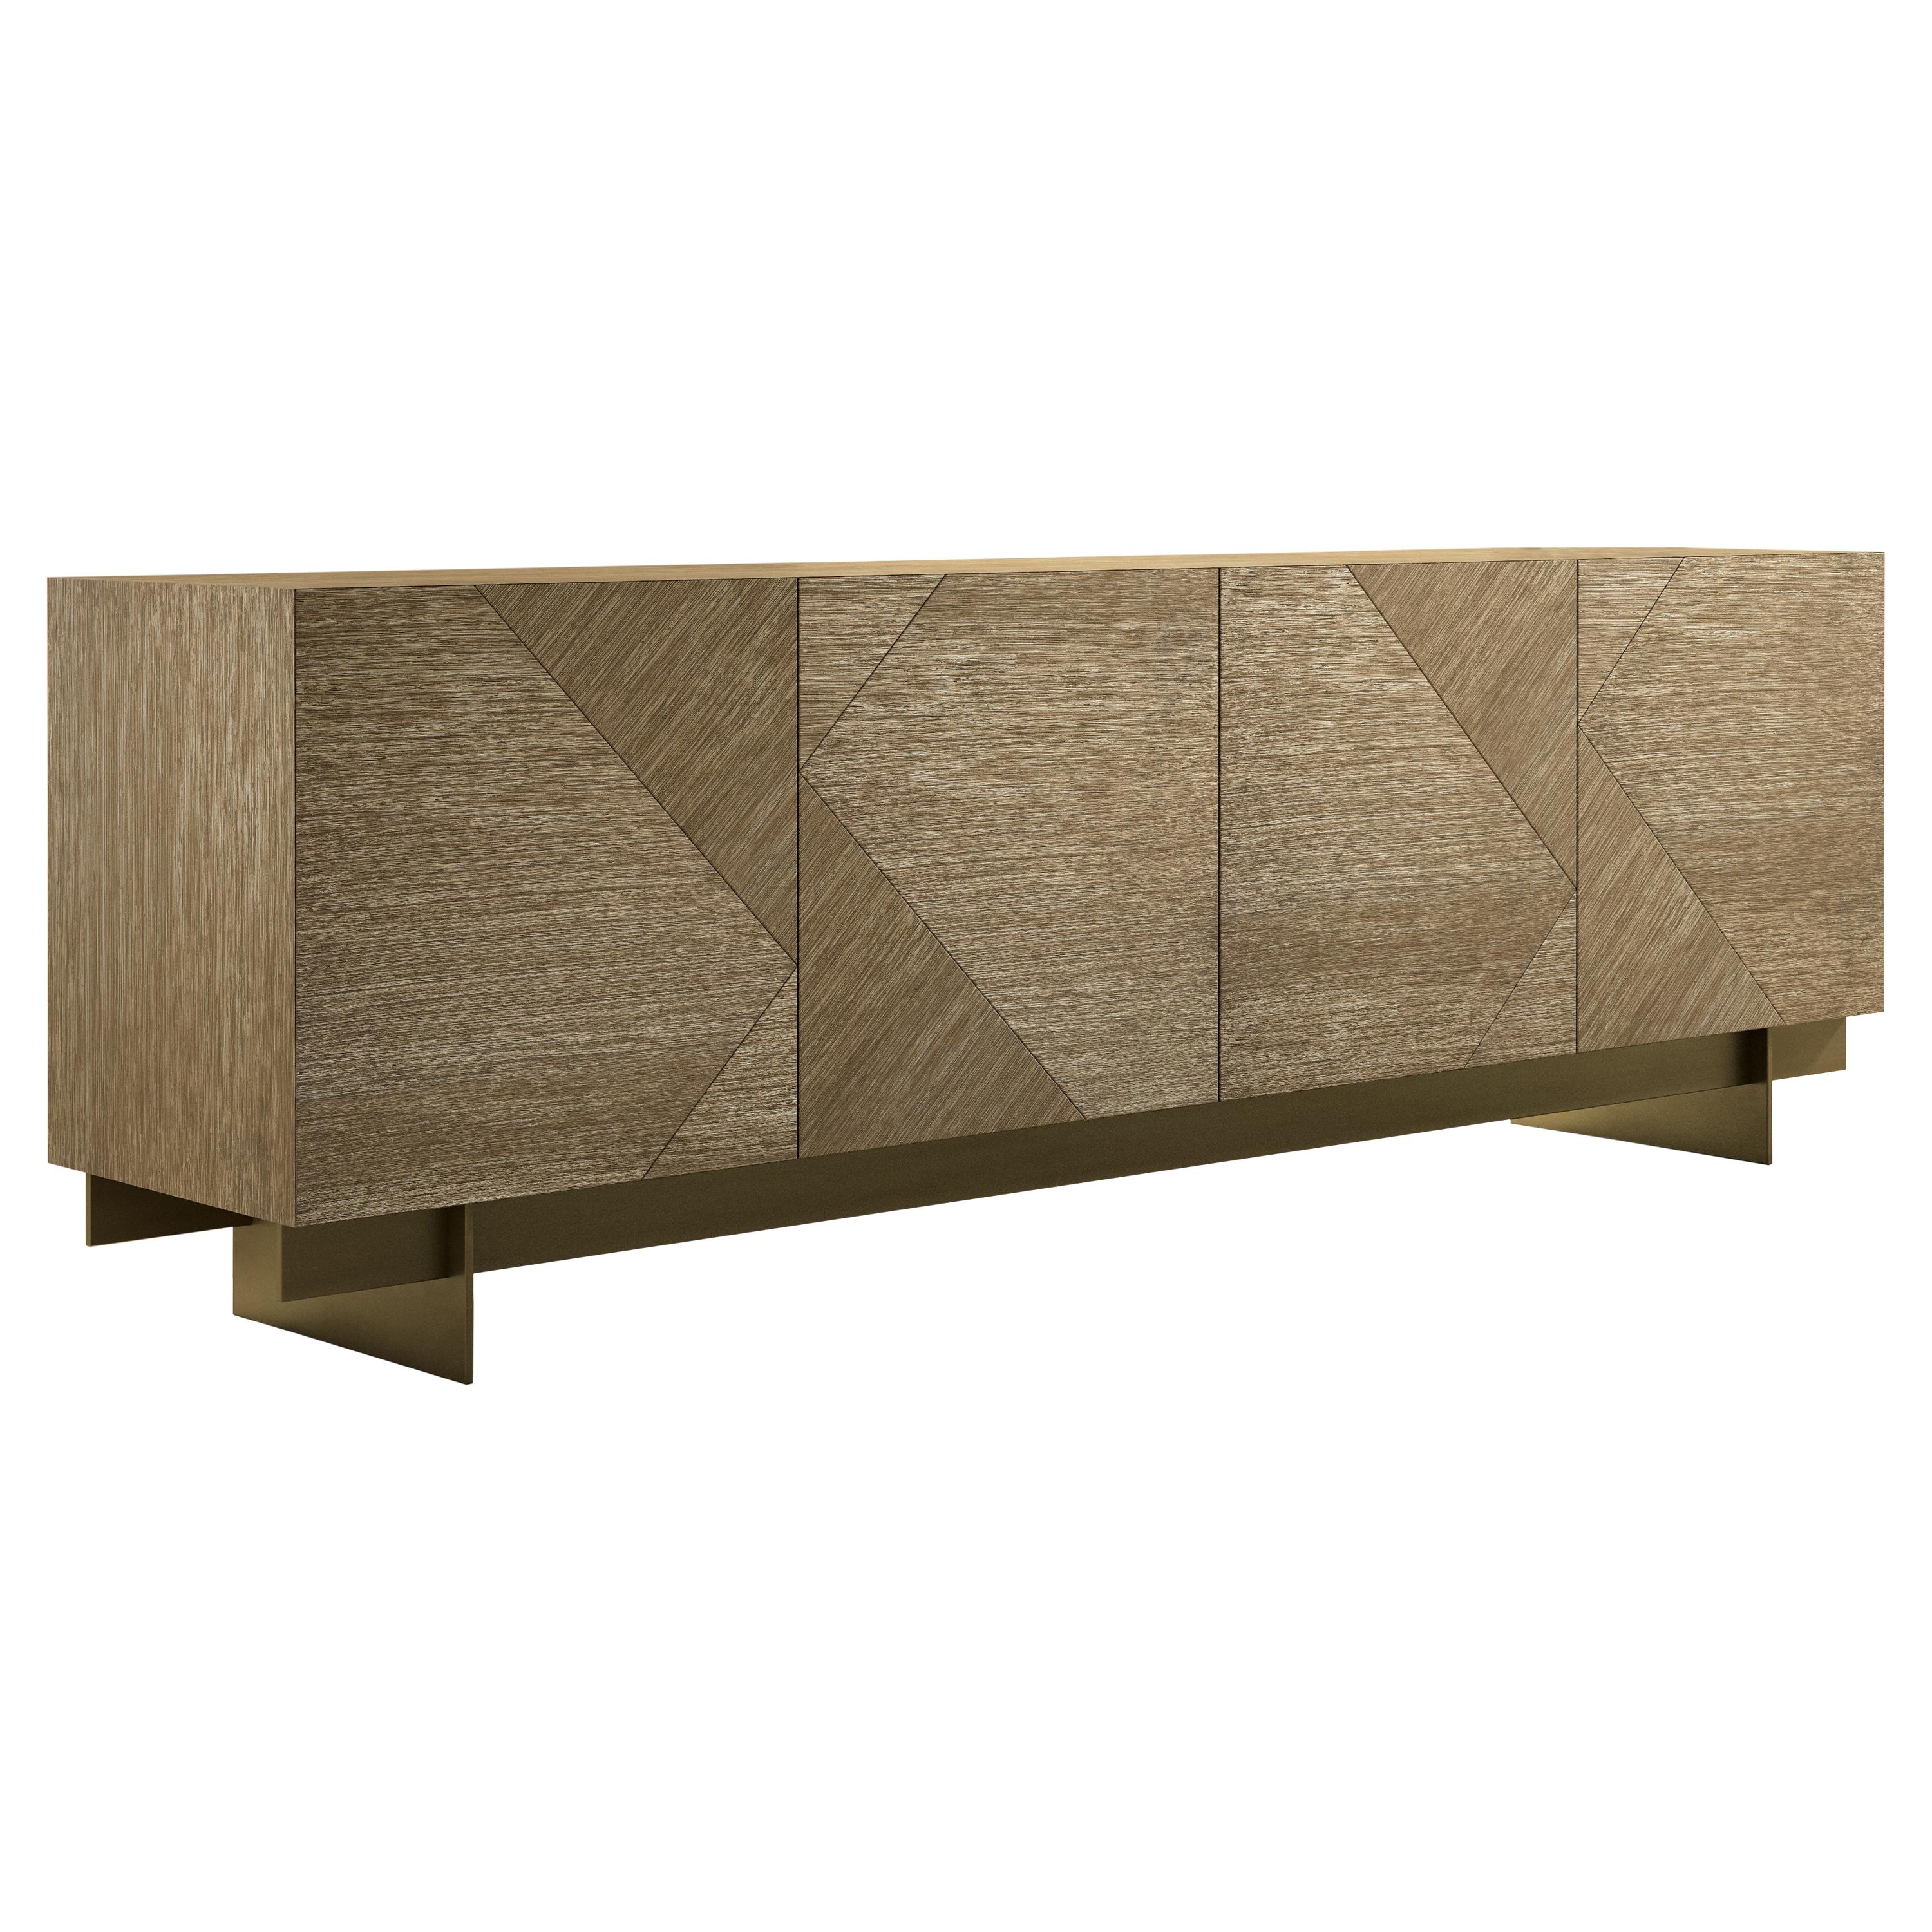 Laurameroni „Tatami“ Modernes Sideboard aus Holz mit Tatami-Dekorationen im Angebot